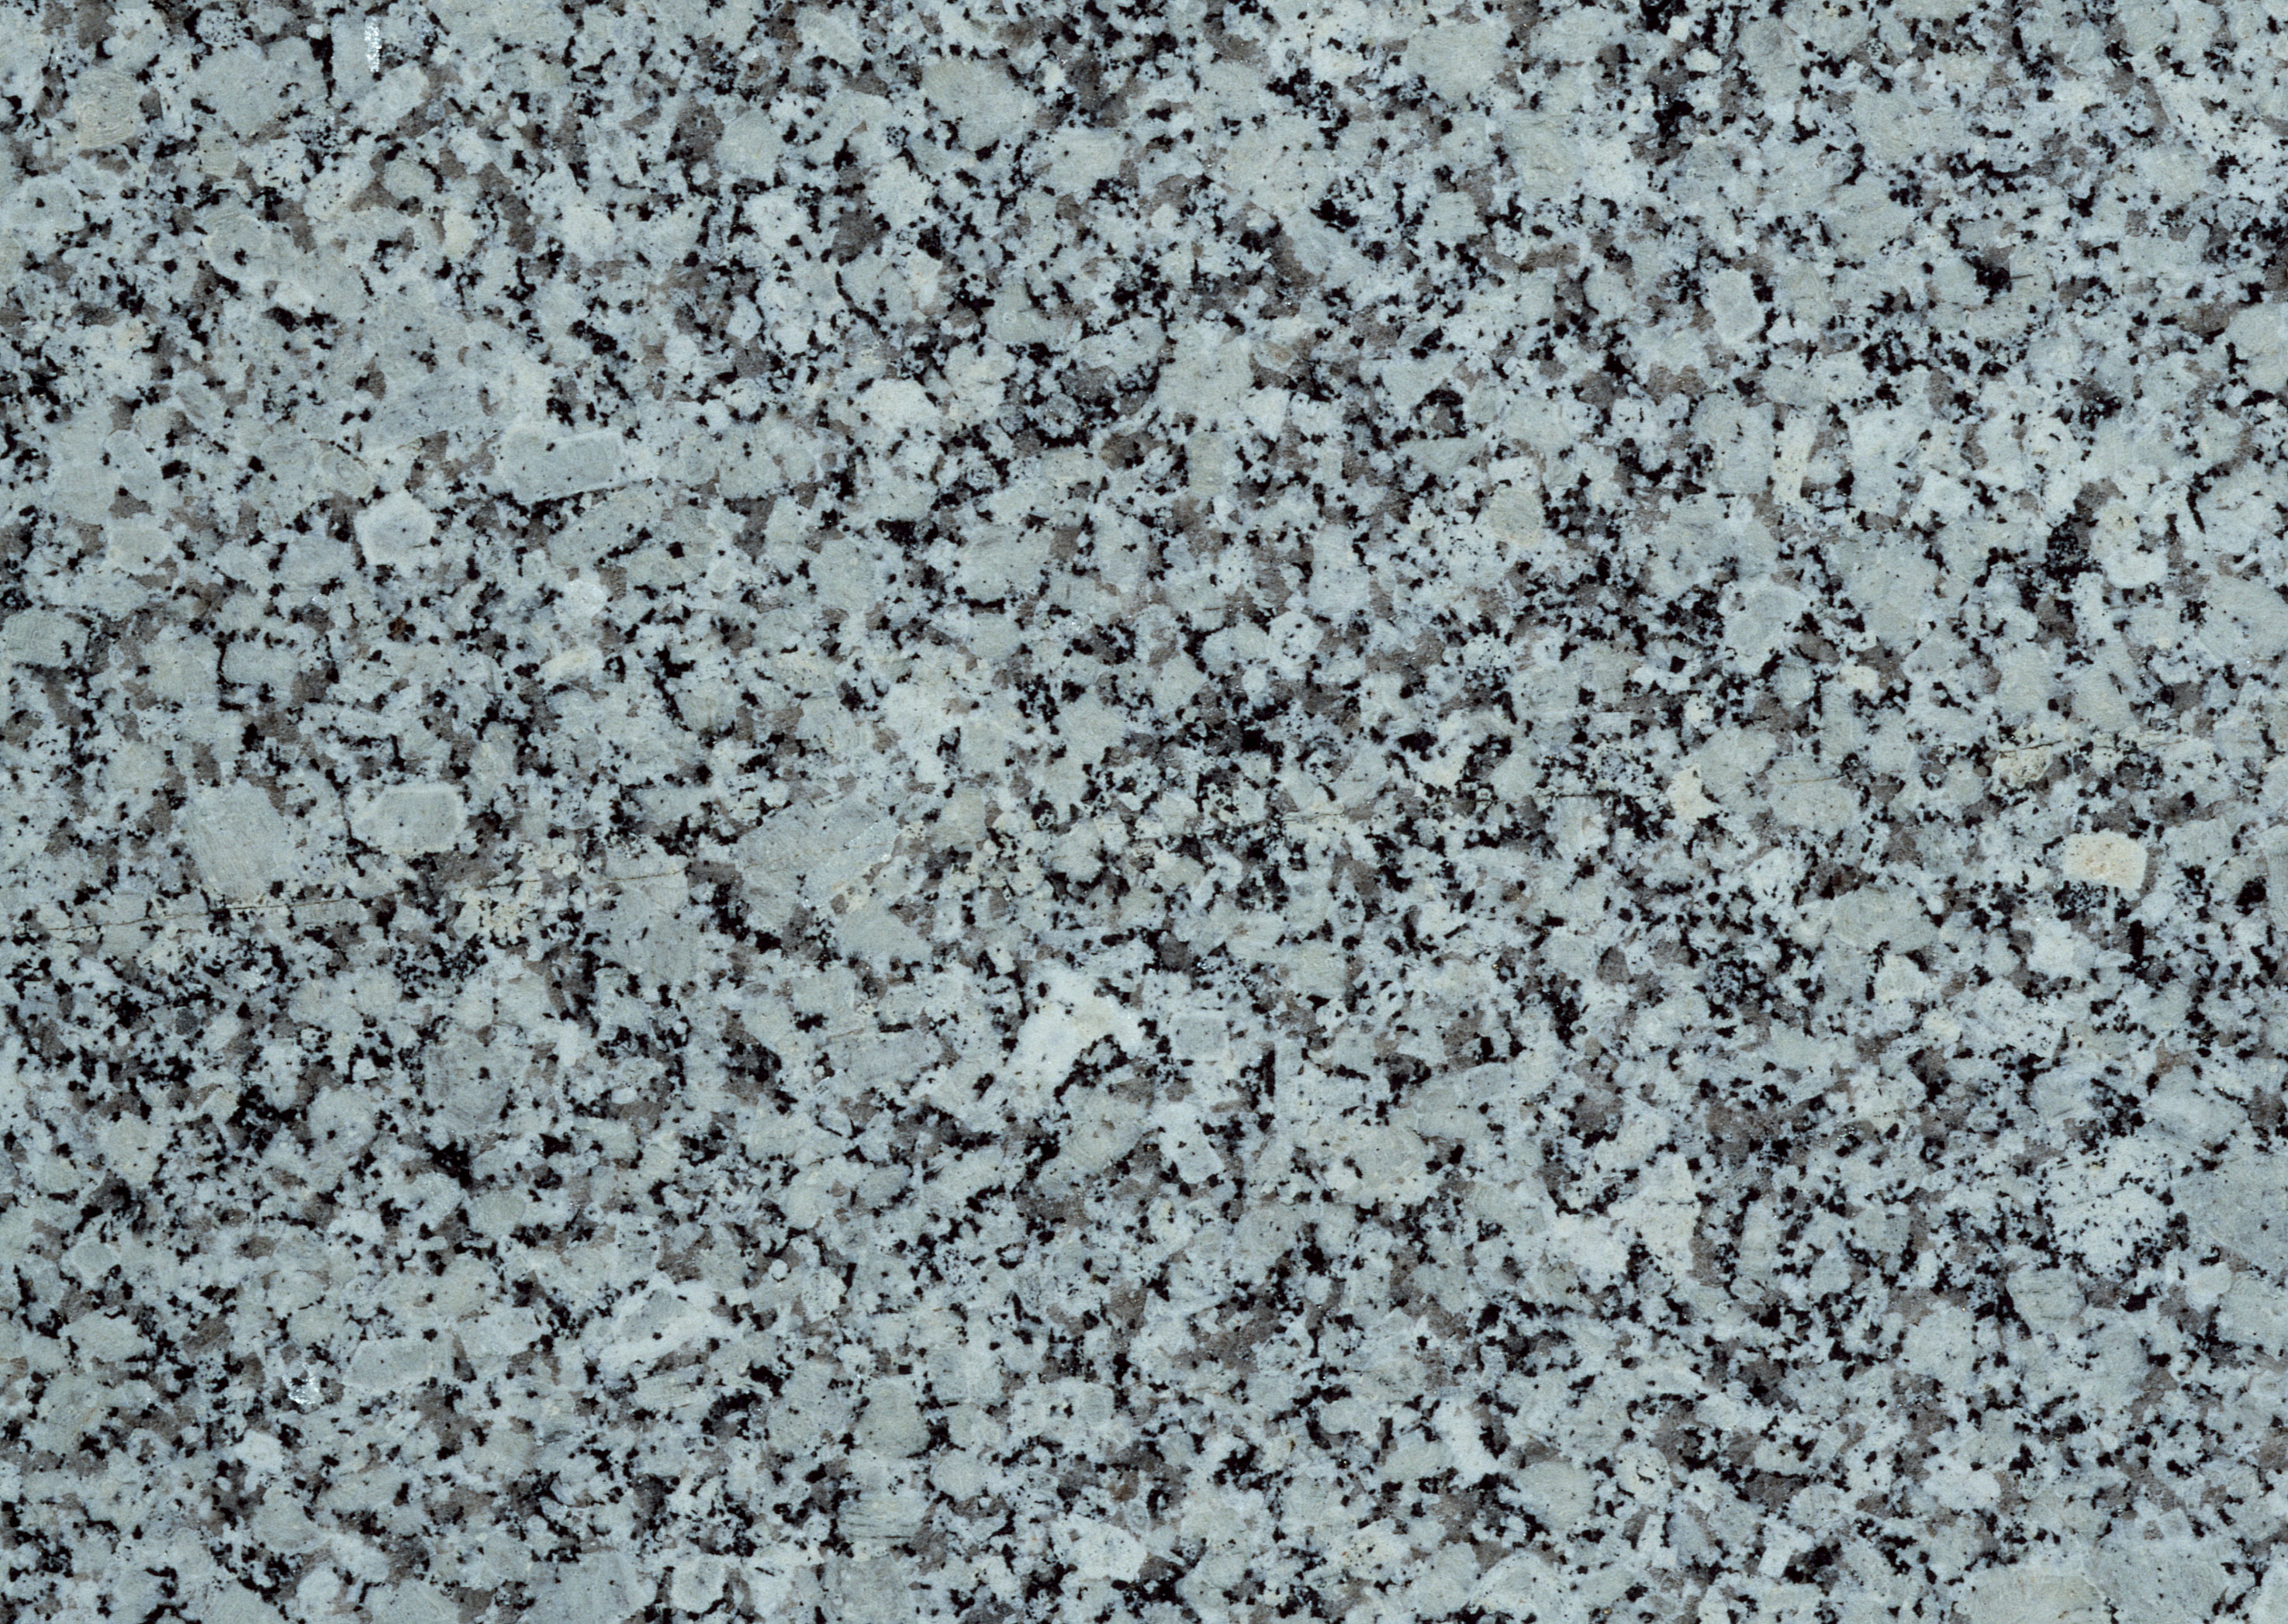 Granite stone texture background image